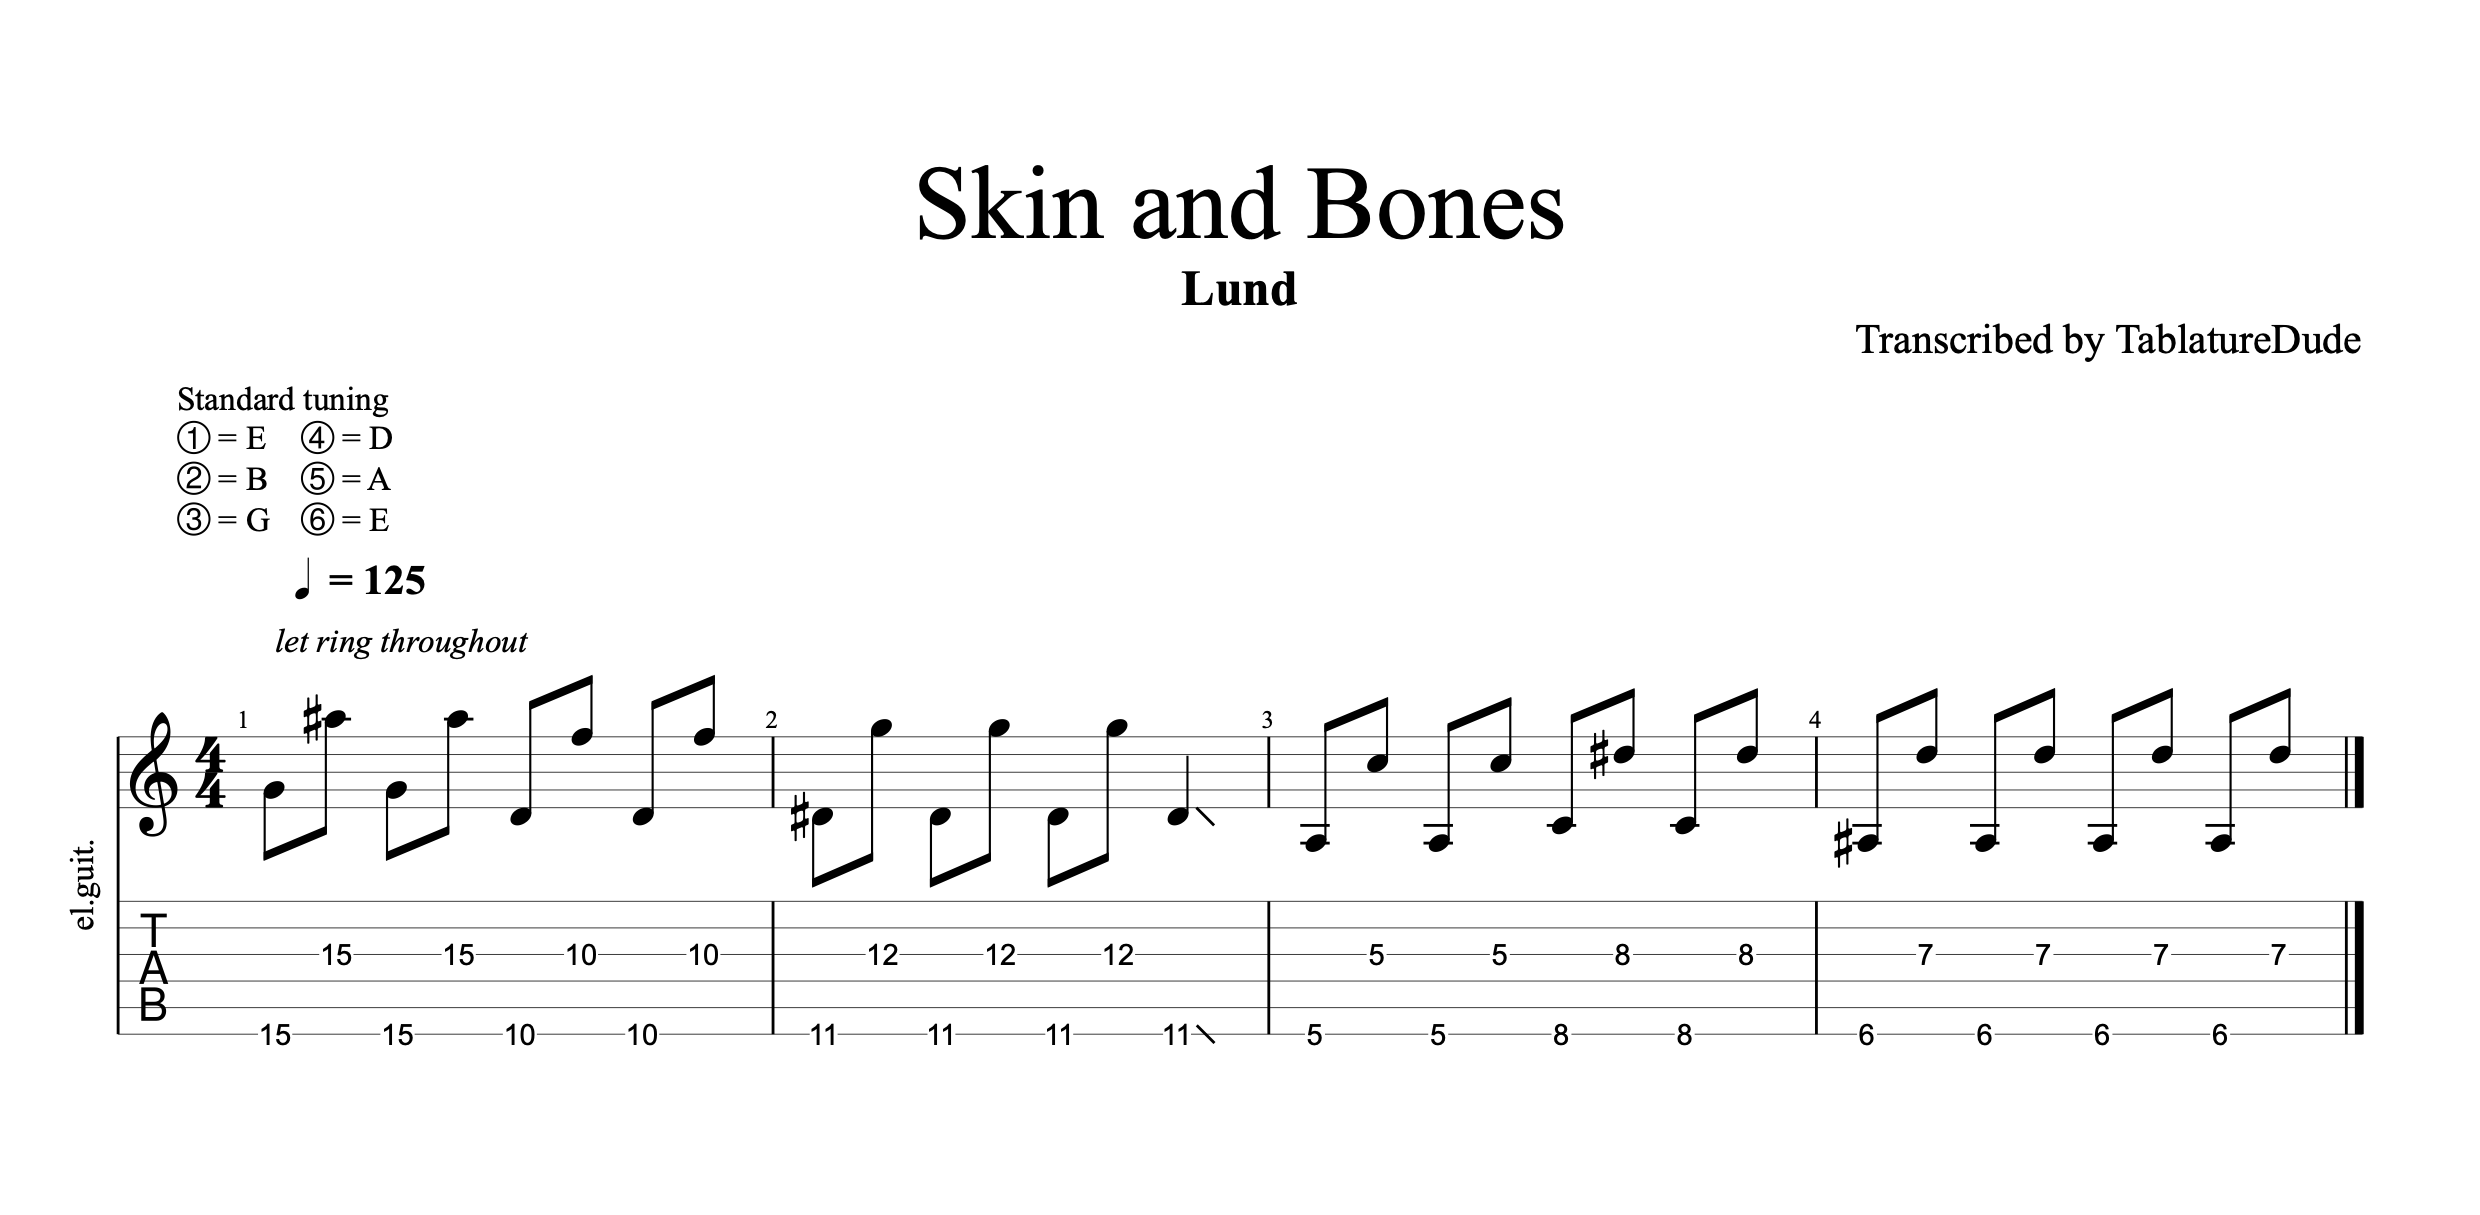 Skin and bones lyrics lund